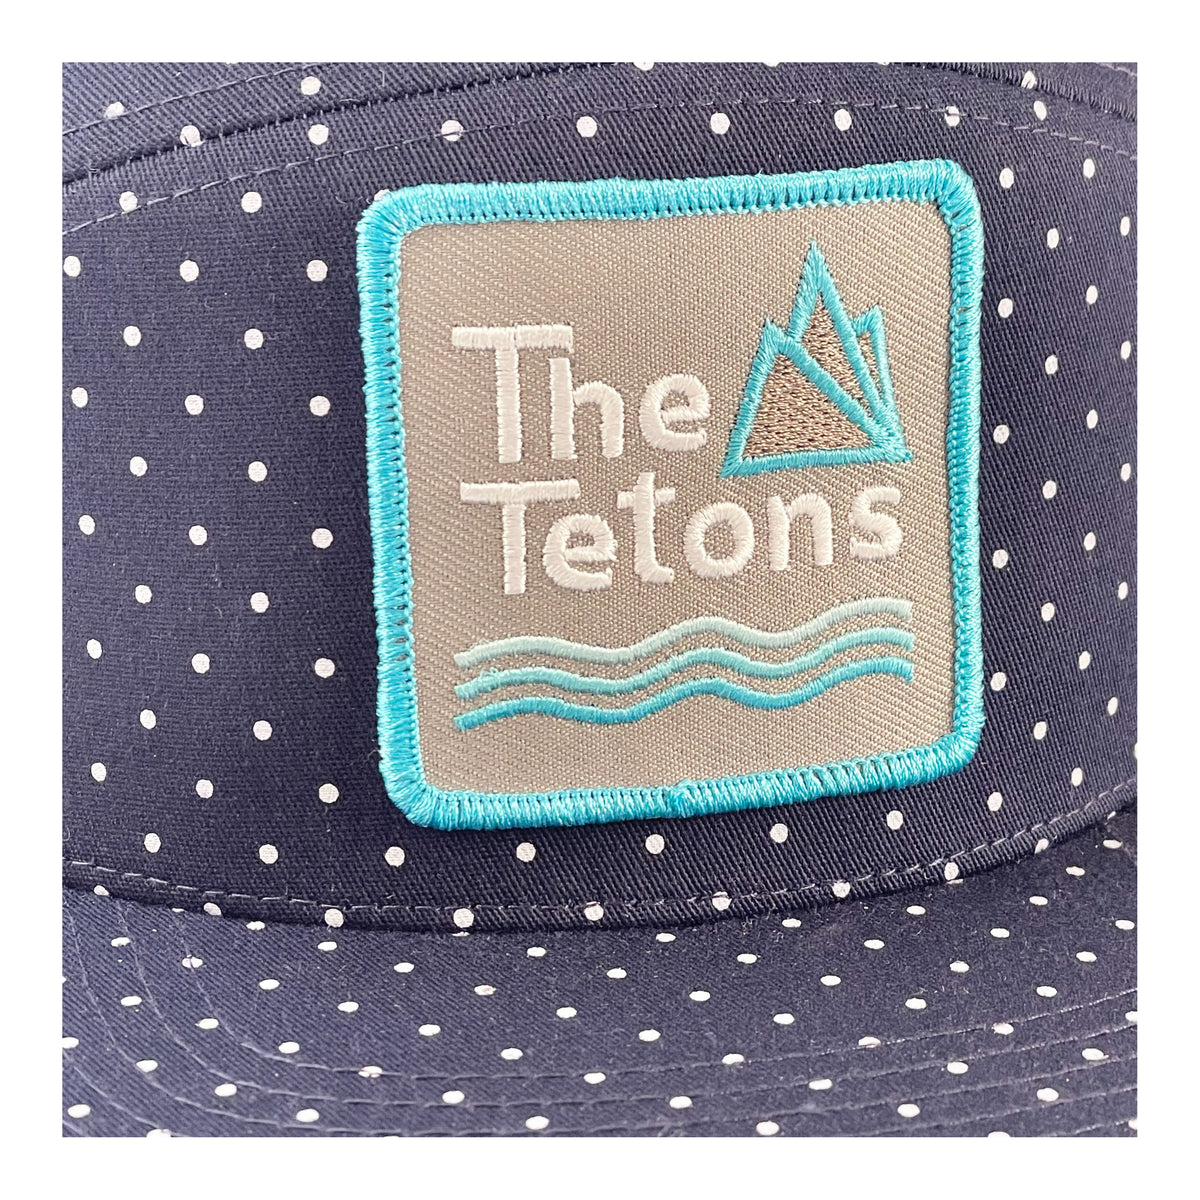 Tetons Patch on Navy Polka Dot Flat Brim Hat